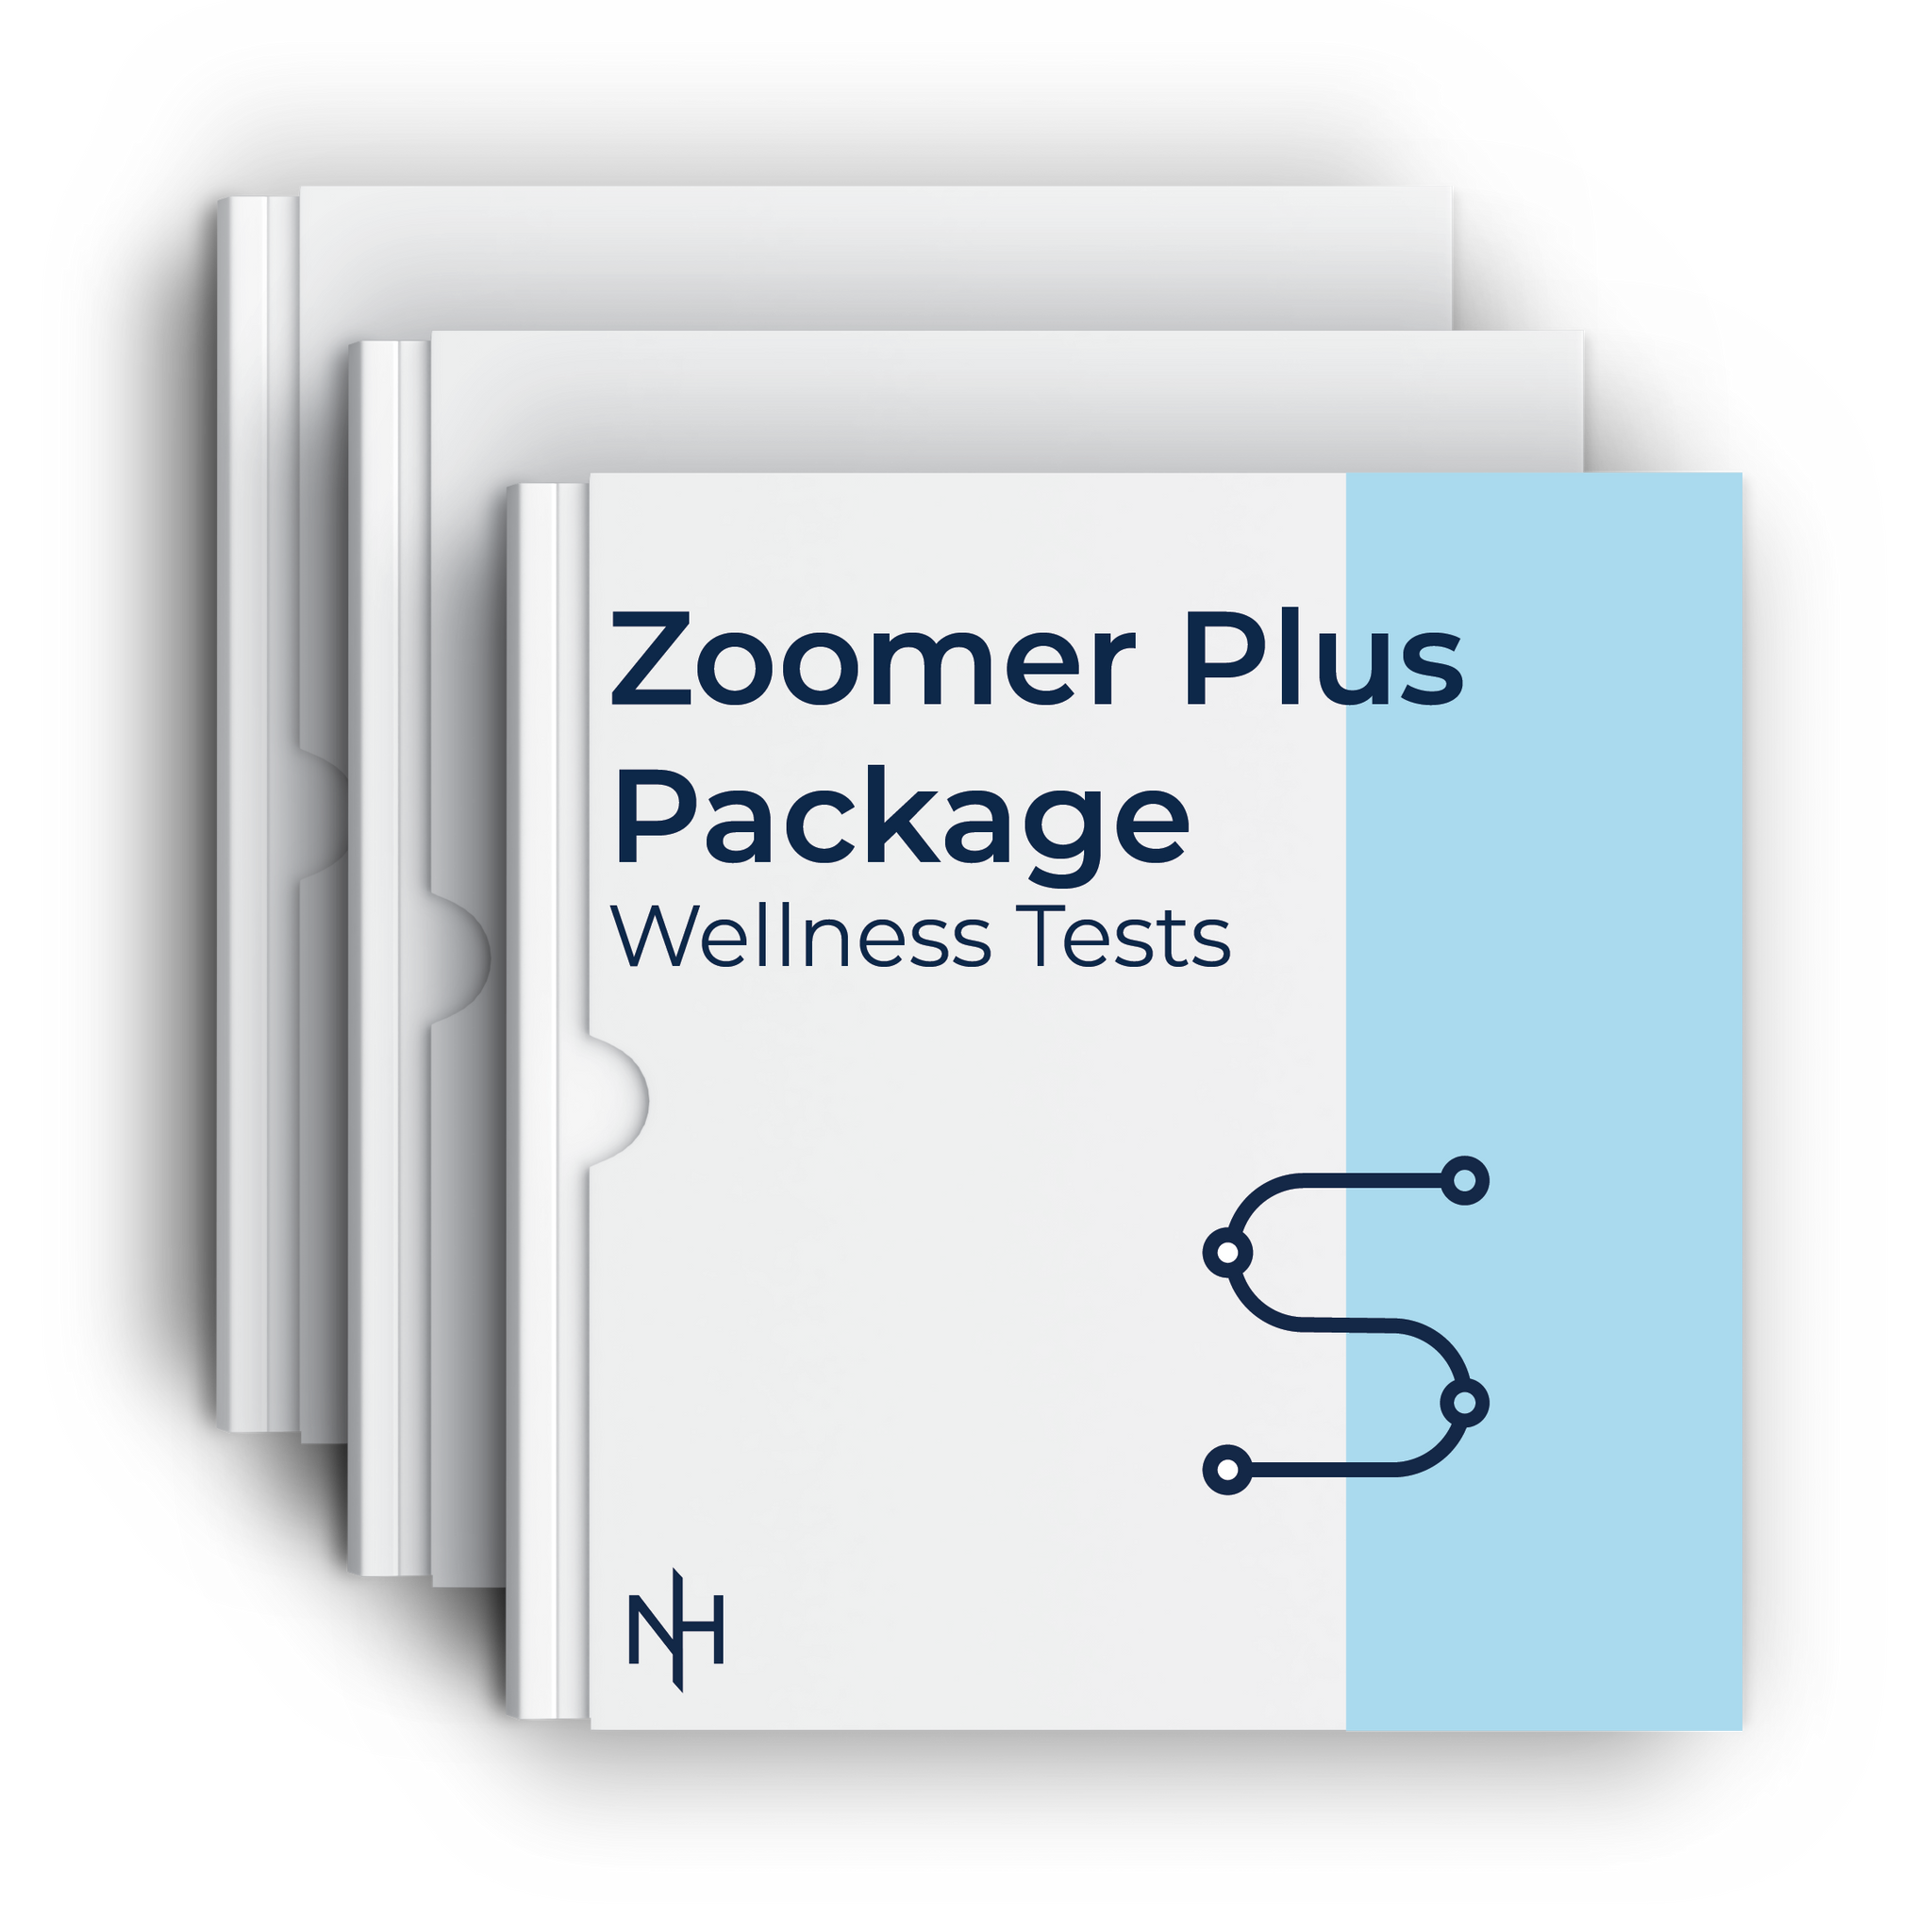 Zoomer Plus Package